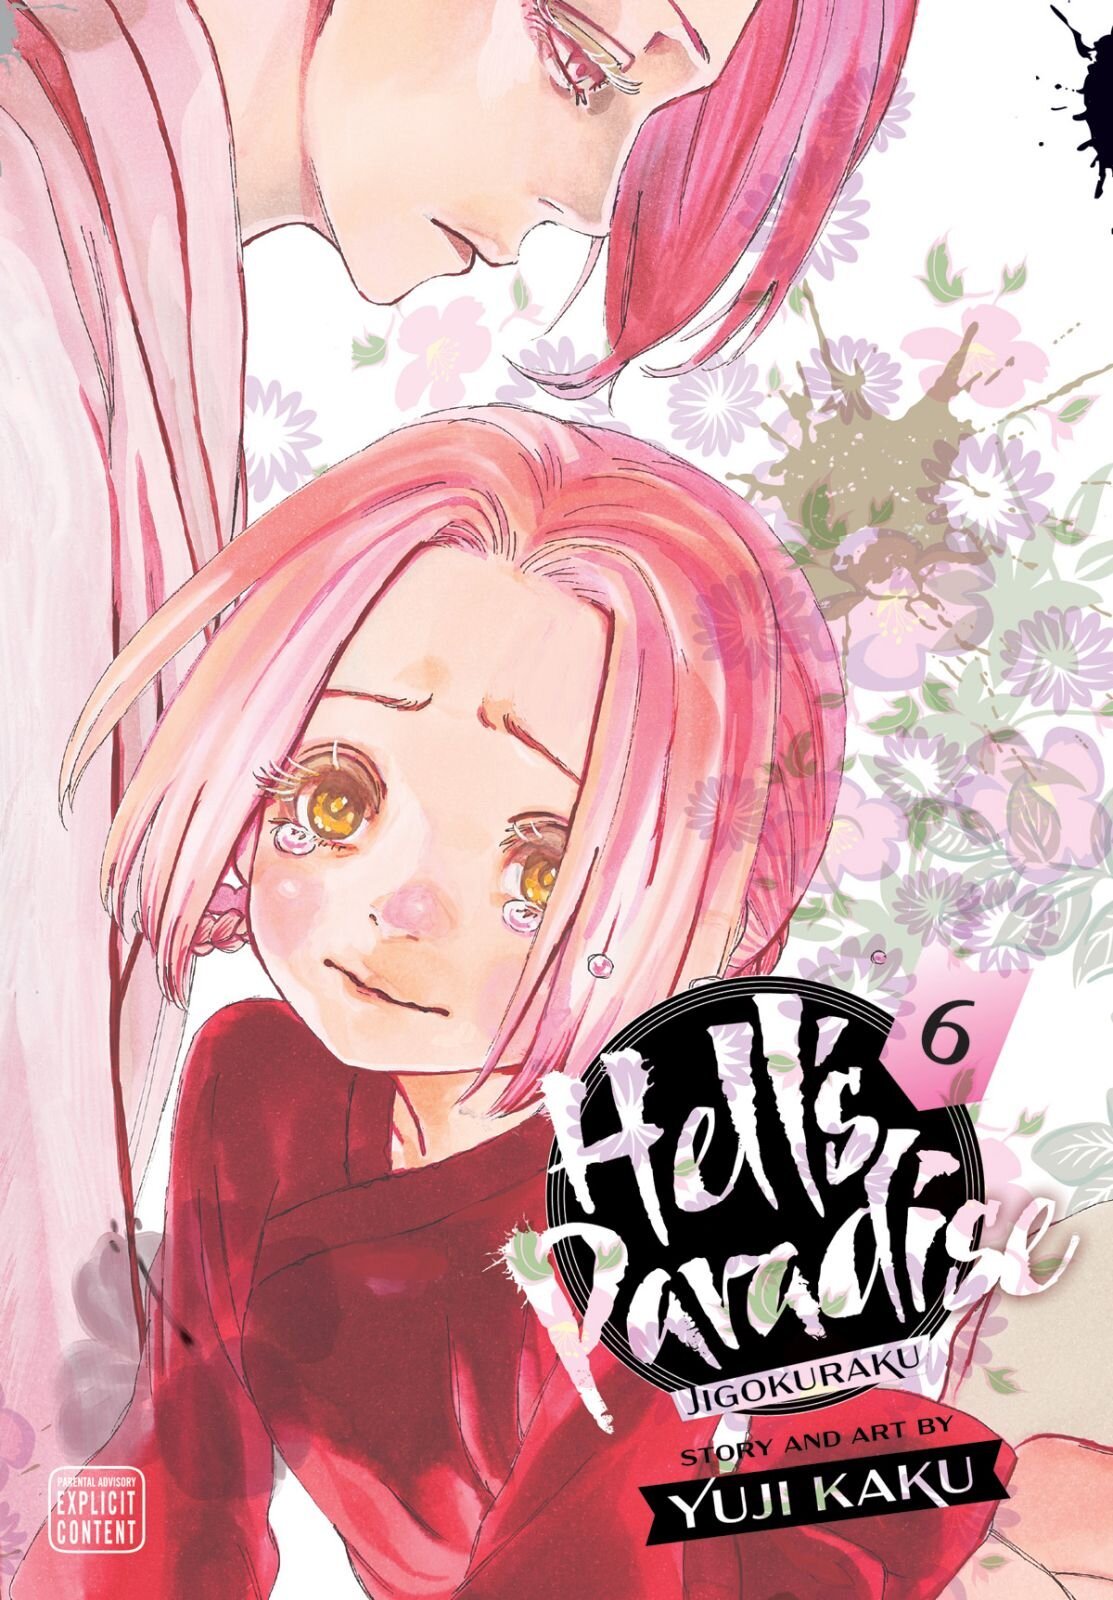 Matt ⁉ on X: Hell's Paradise: Jigokuraku Gabimaru. Manga Coloring